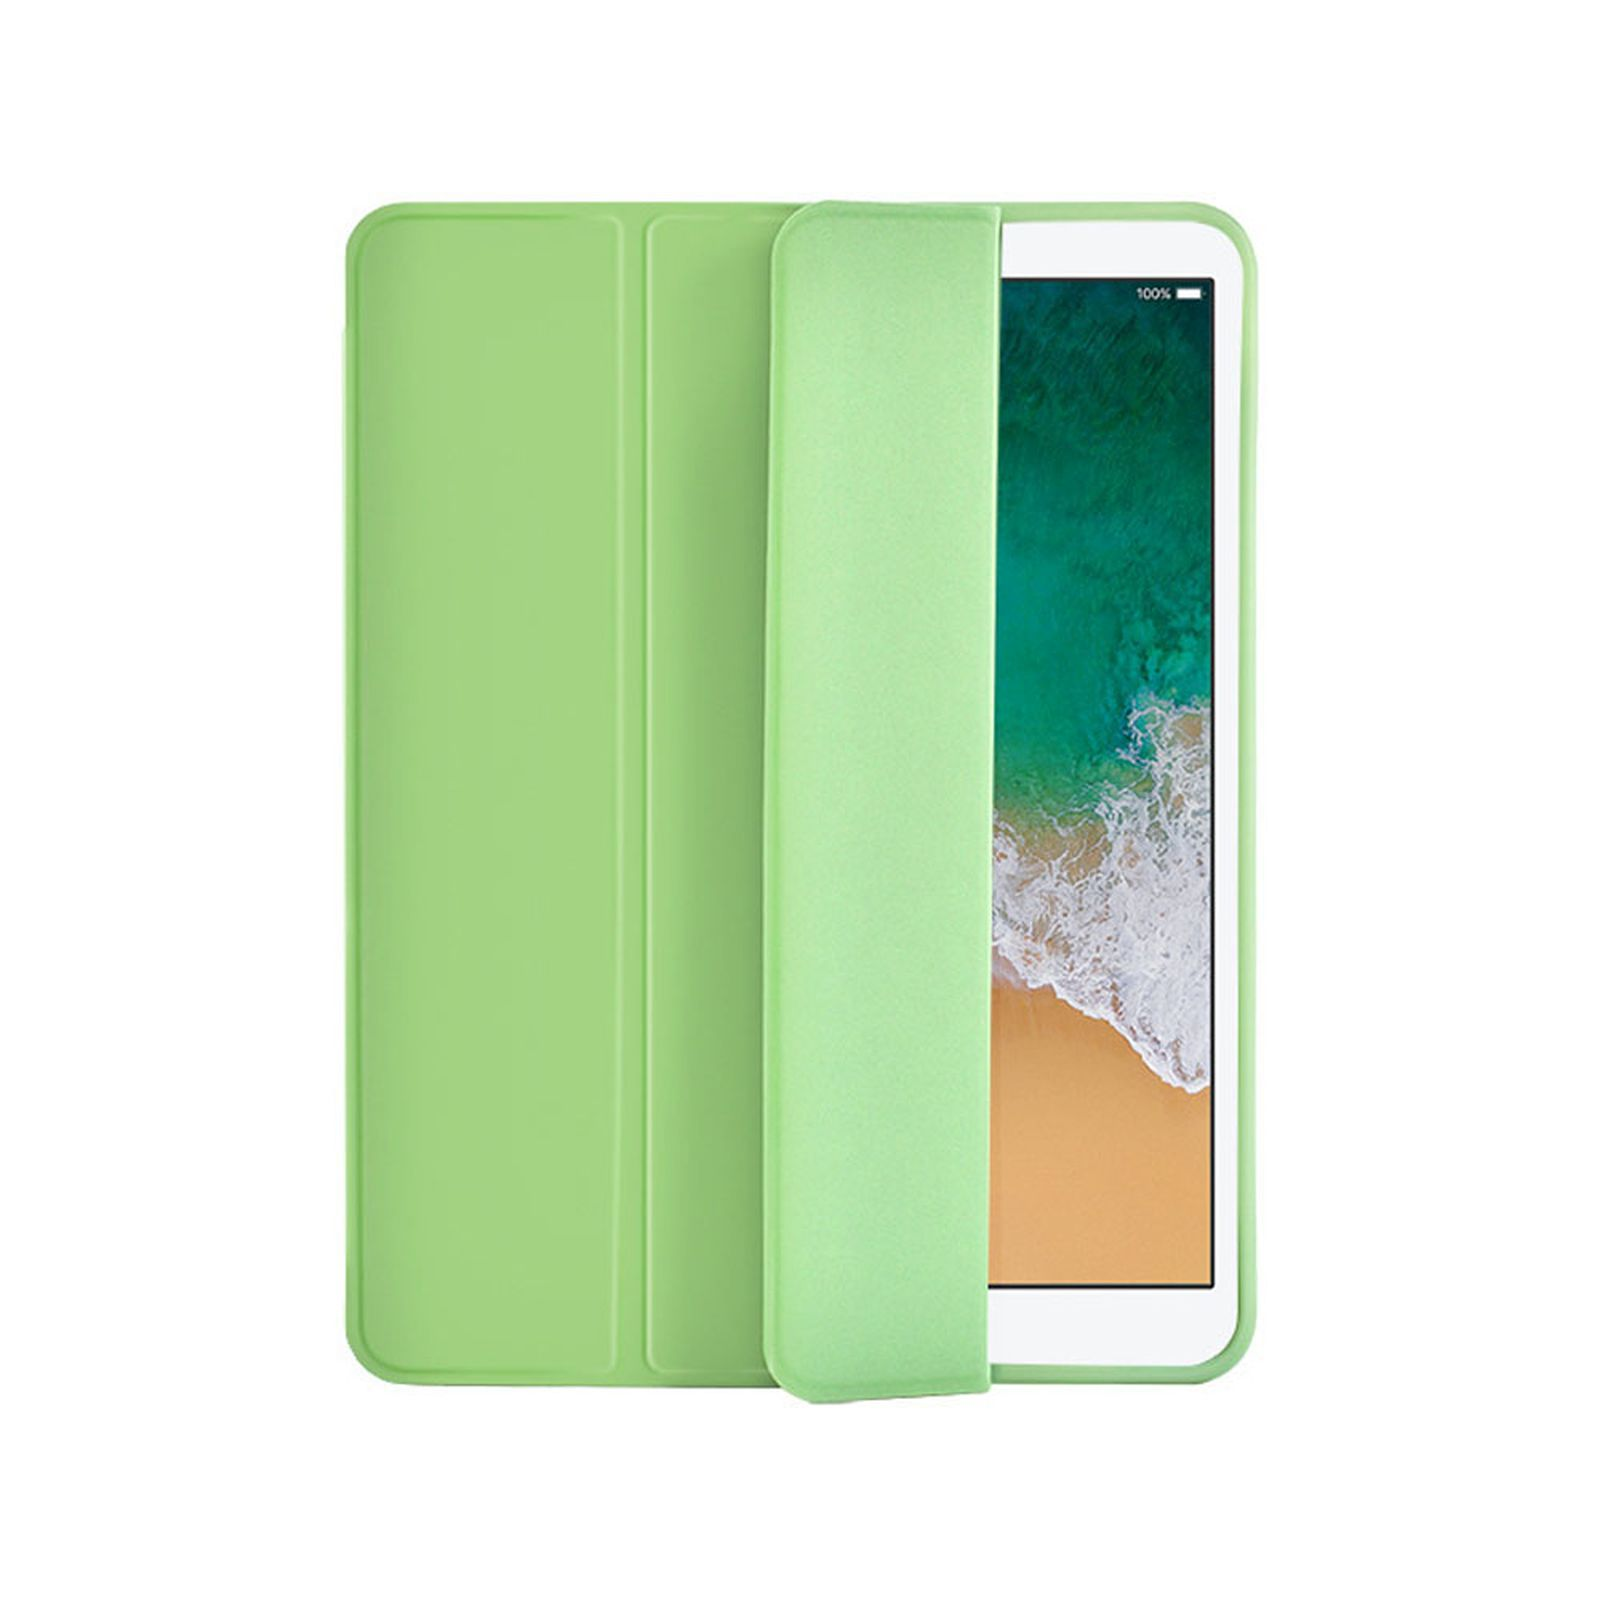 Hülle 9.7 Bookcover Zoll 1 Grün für Air iPad 9.7 Air Apple LOBWERK 2 Schutzhülle Kunststoff,